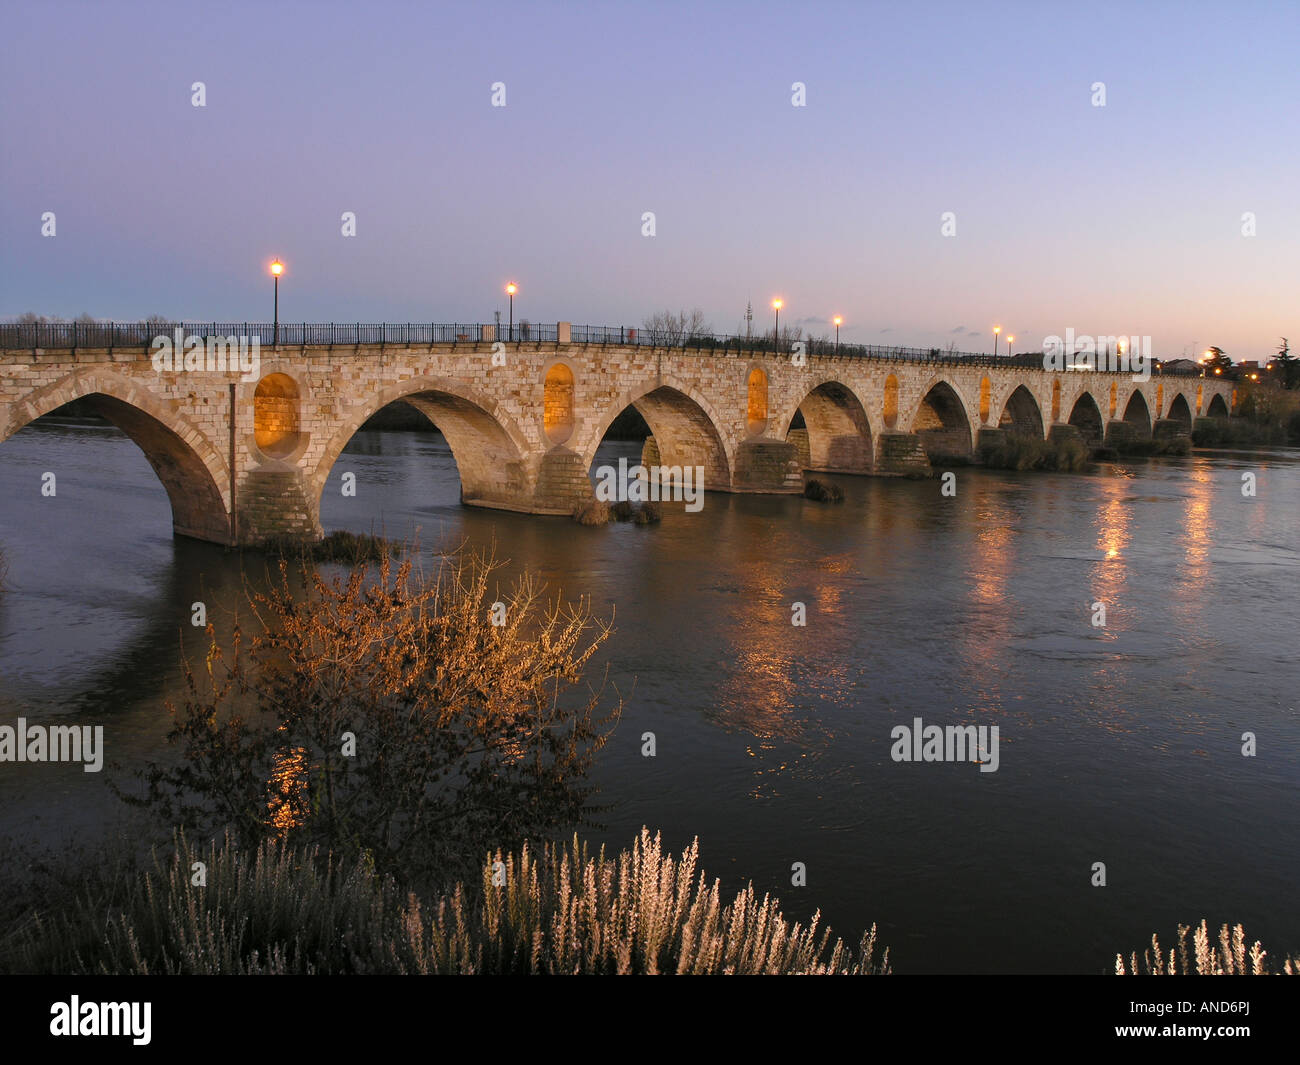 Puente de Piedra over Douro river Zamora Spain Stock Photo